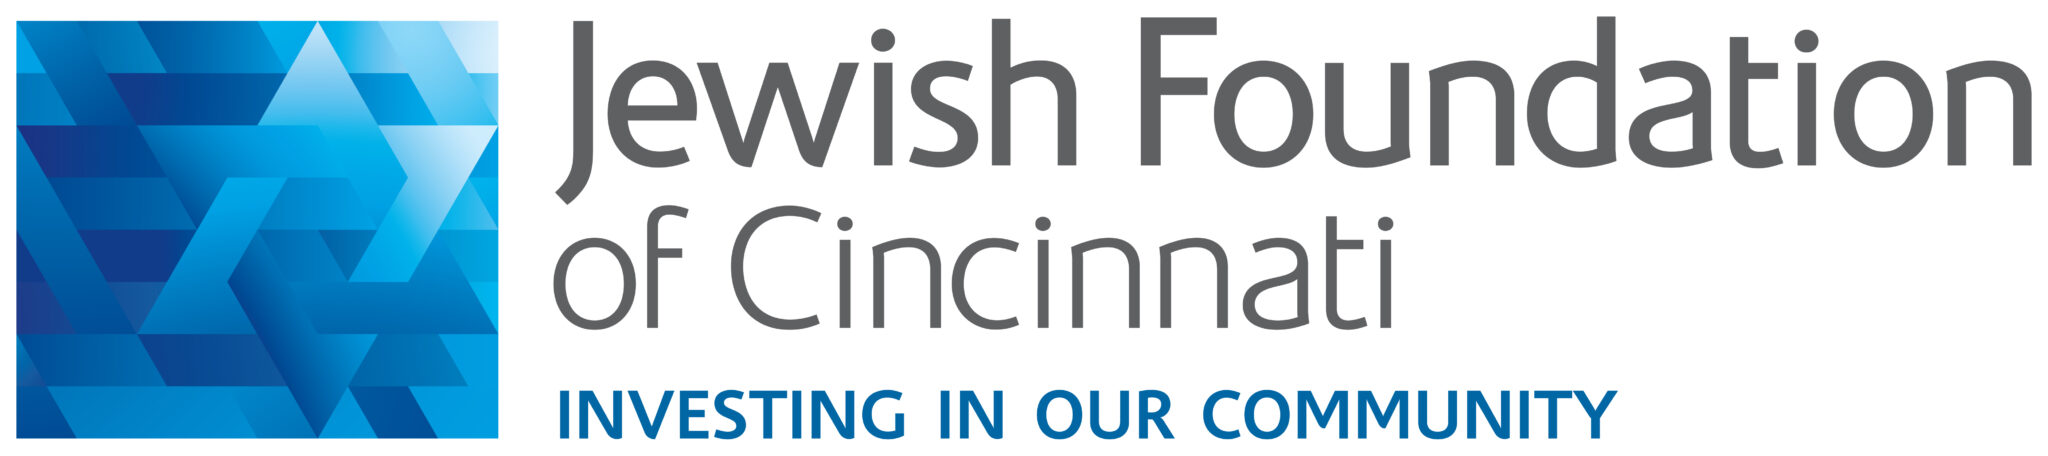 This is the Jewish Foundation of Cincinnati logo